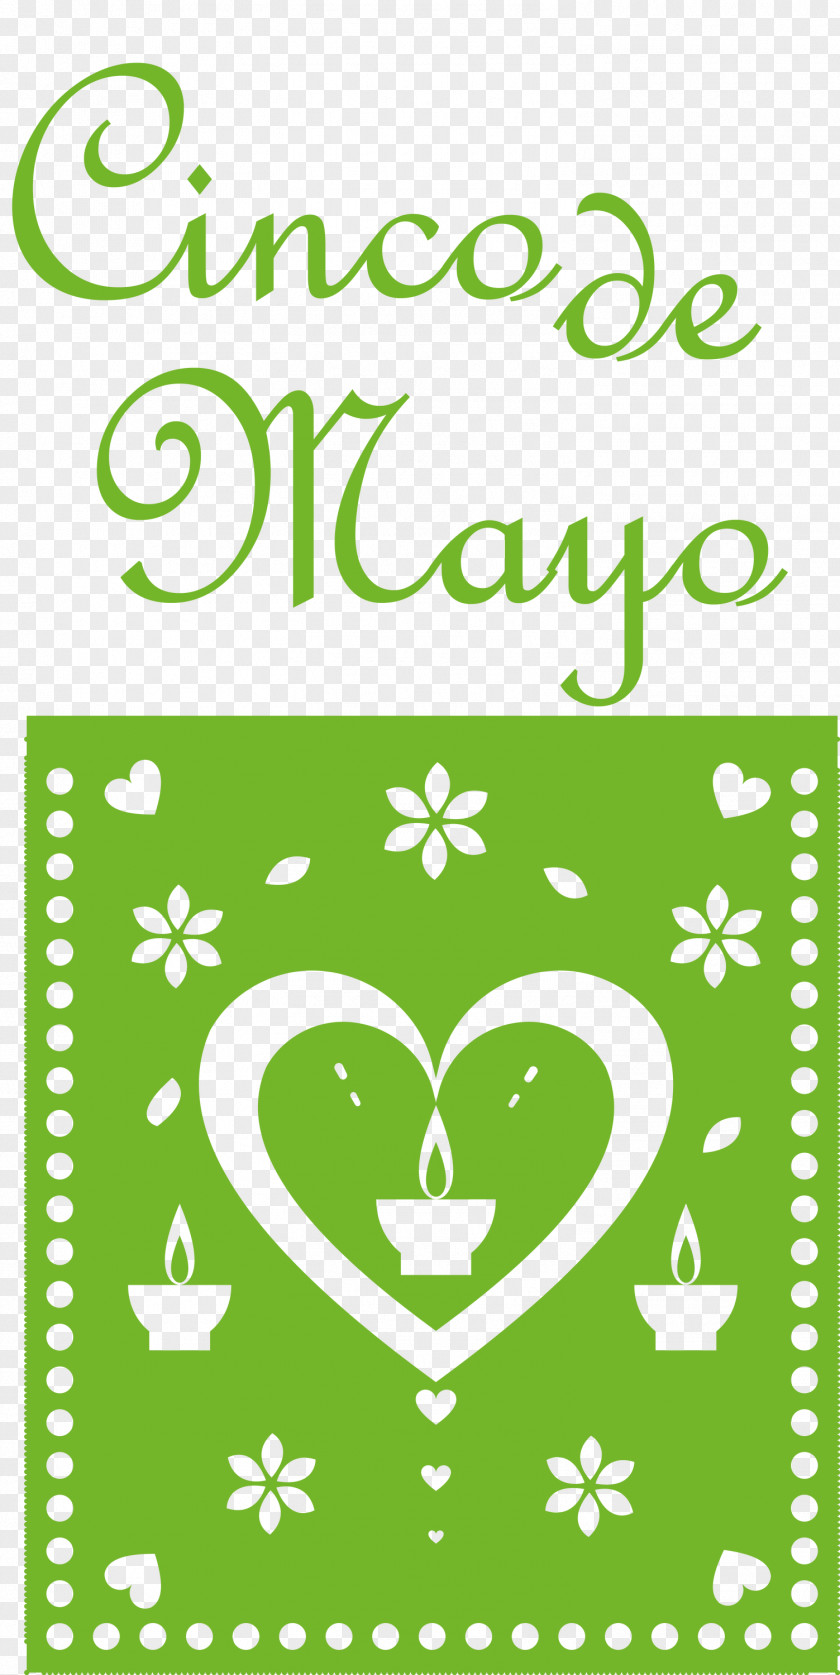 Cinco De Mayo Fifth Of May PNG